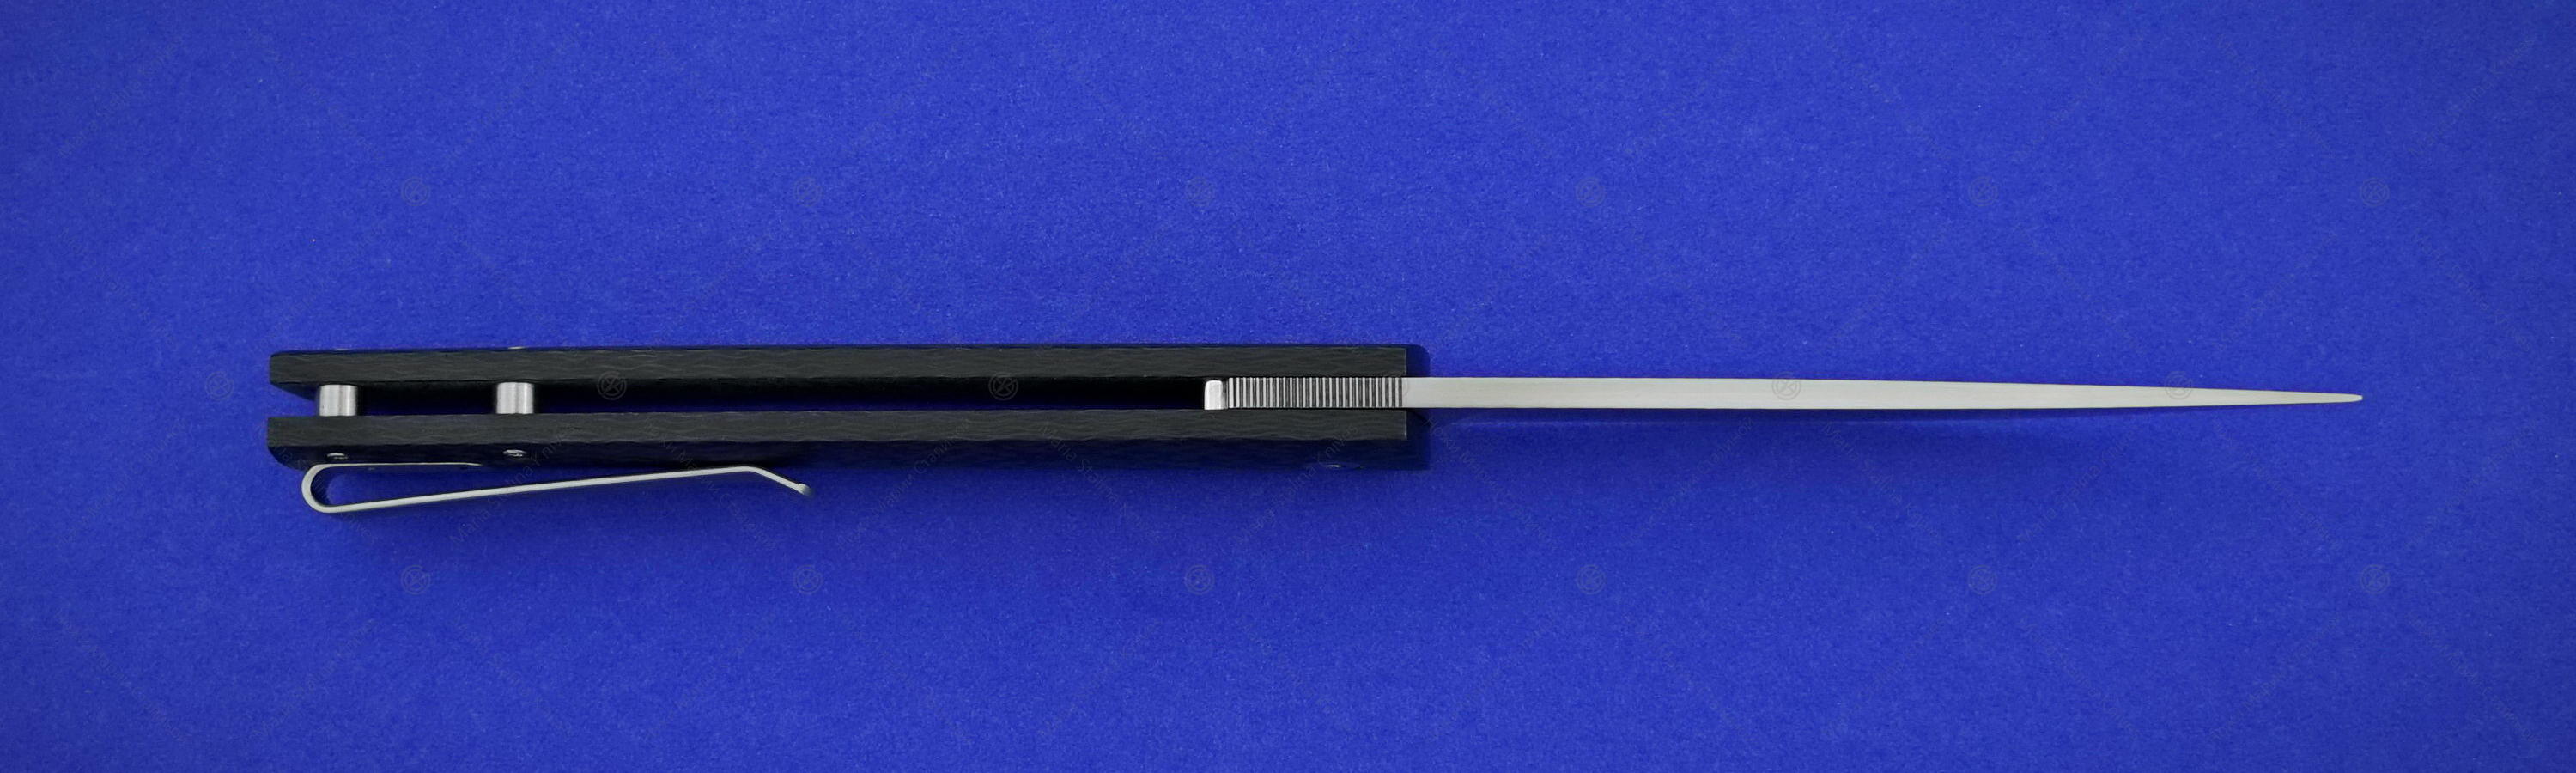 Модель ножа Basic